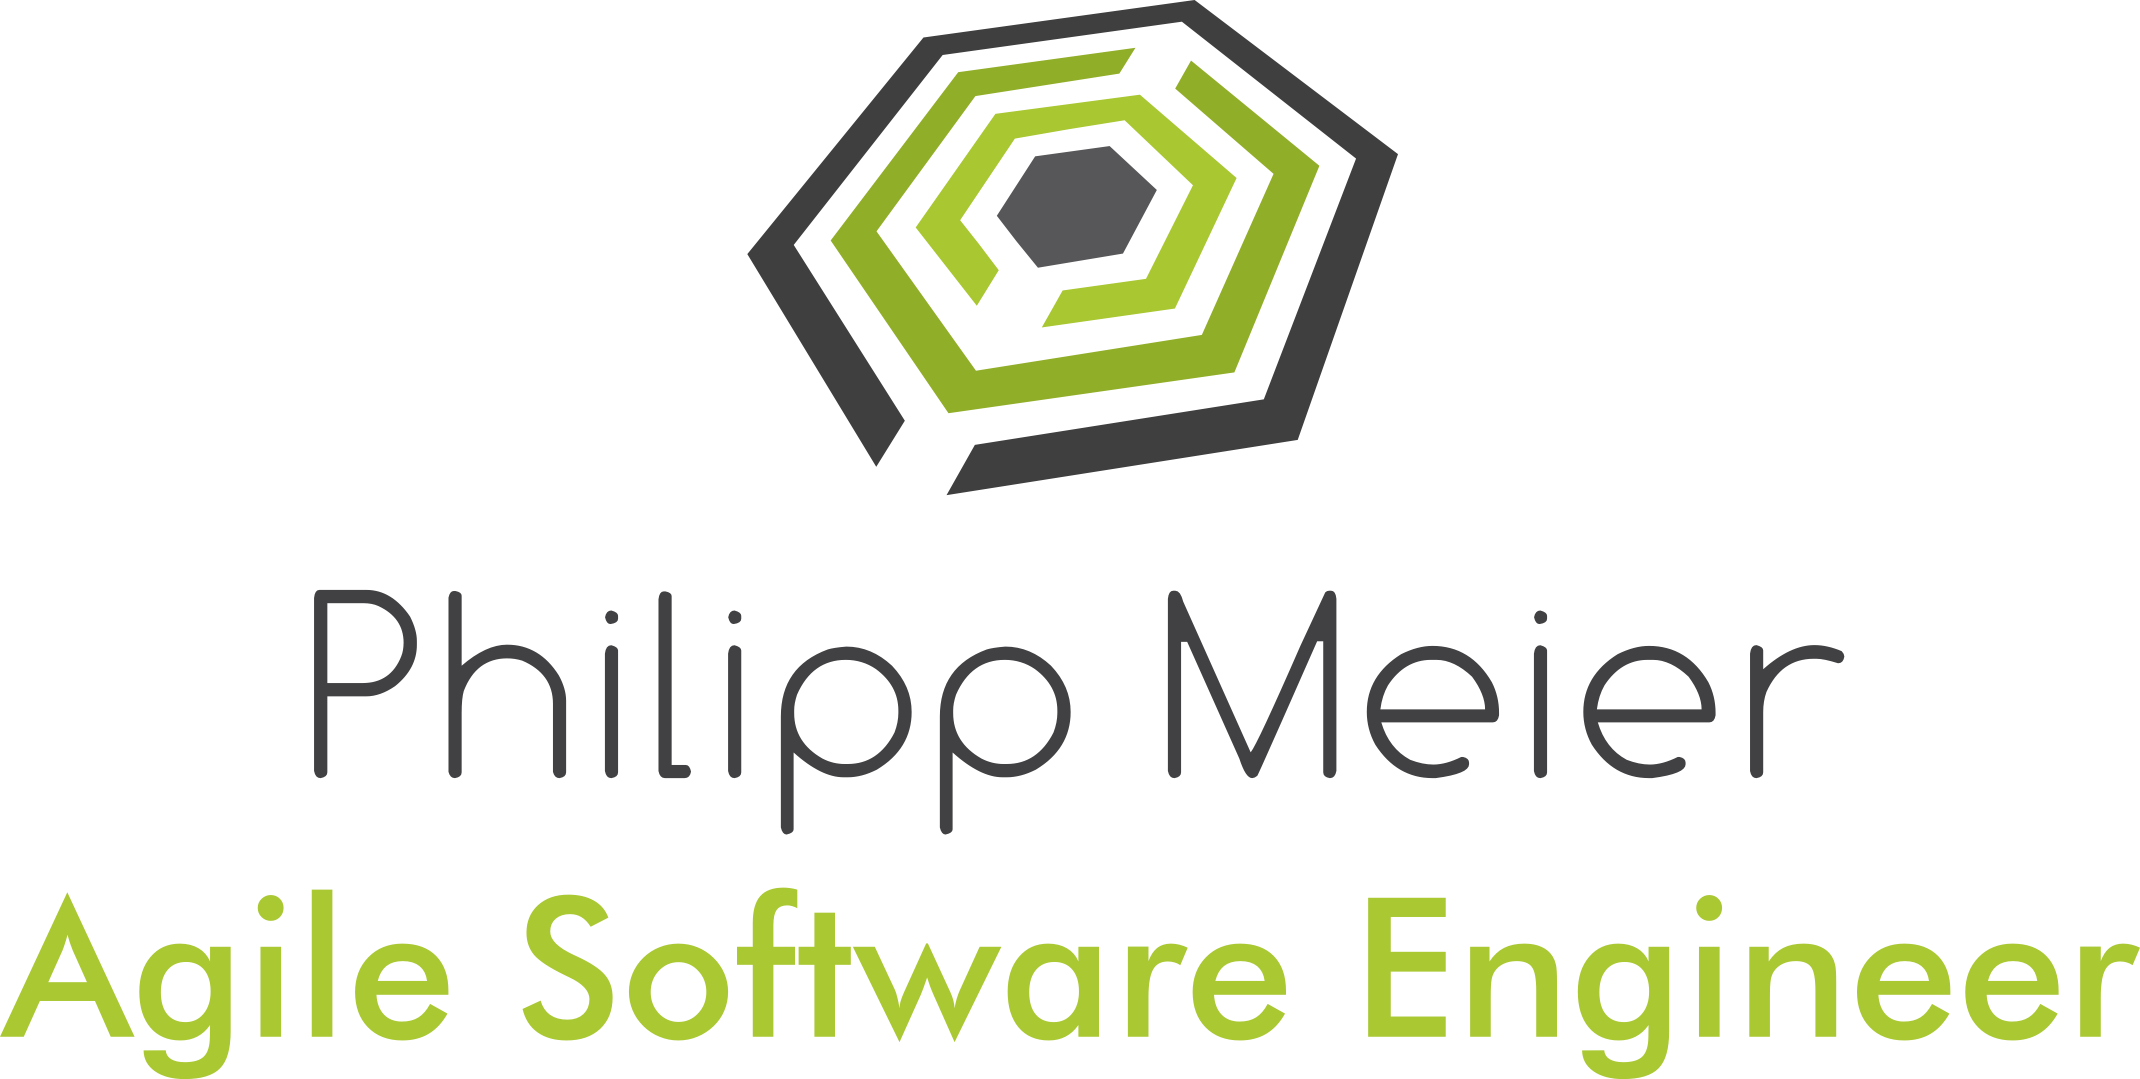 Philipp Meier - Agile Software Engineer - Logo